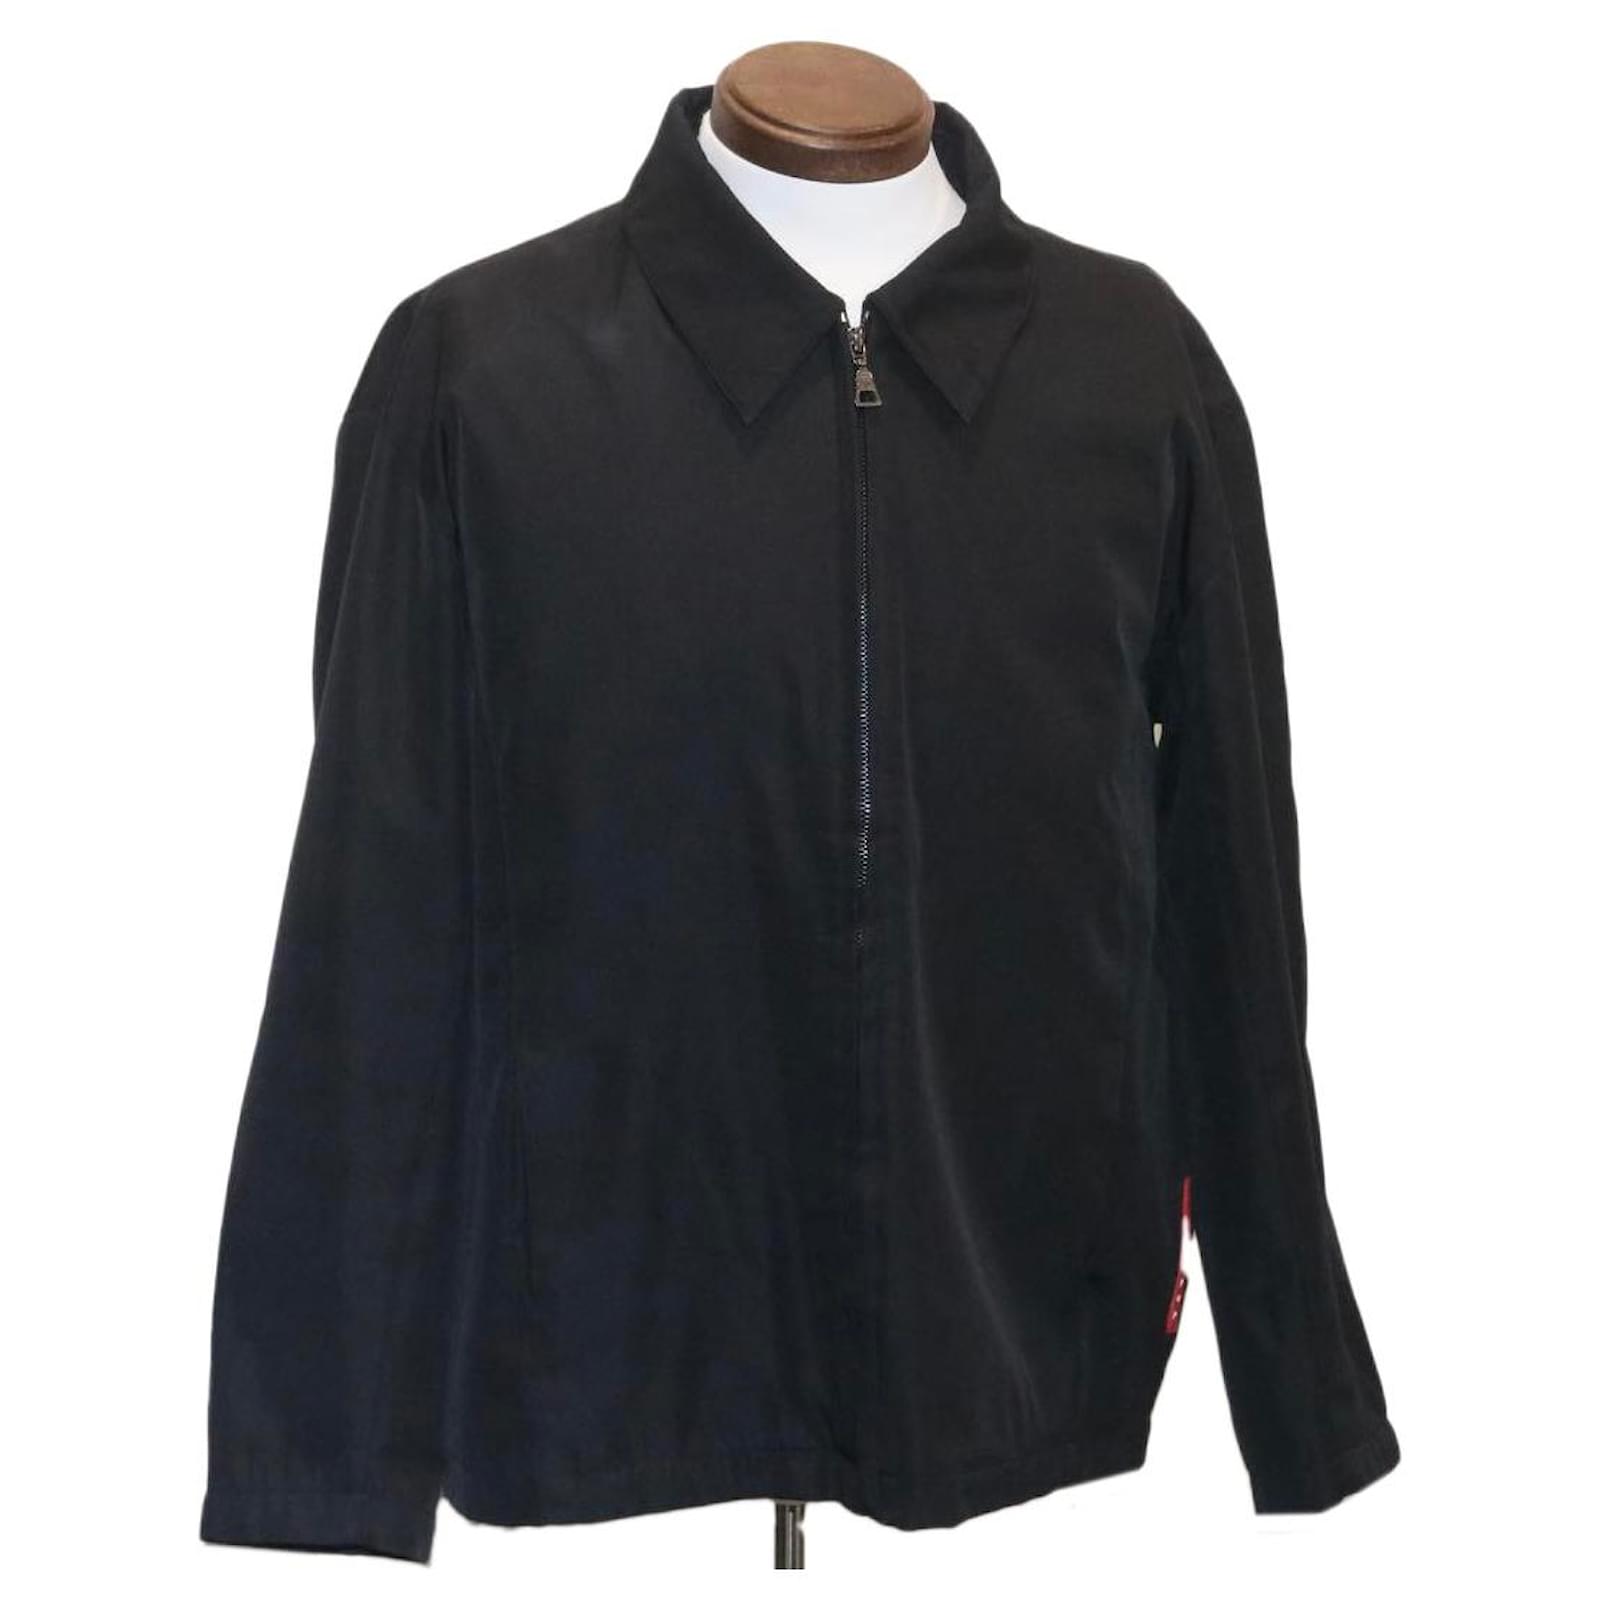 Penkiiy Men Solid Casual Thicken Zipper Stand-up Collar Keep Warm Jacket  Coats Sports Coats Polyester Black on Sale - Walmart.com